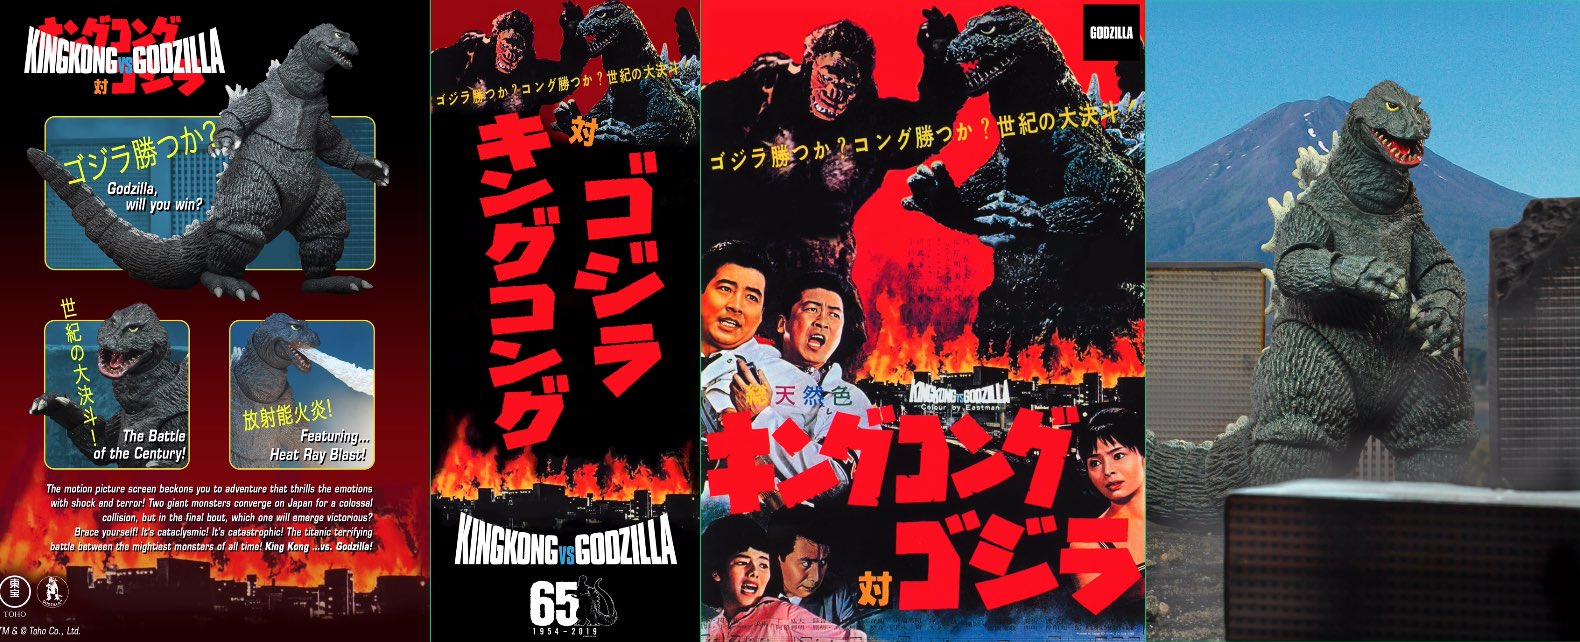 NECA-Godzilla-1962-Packaging-Preview.jpg